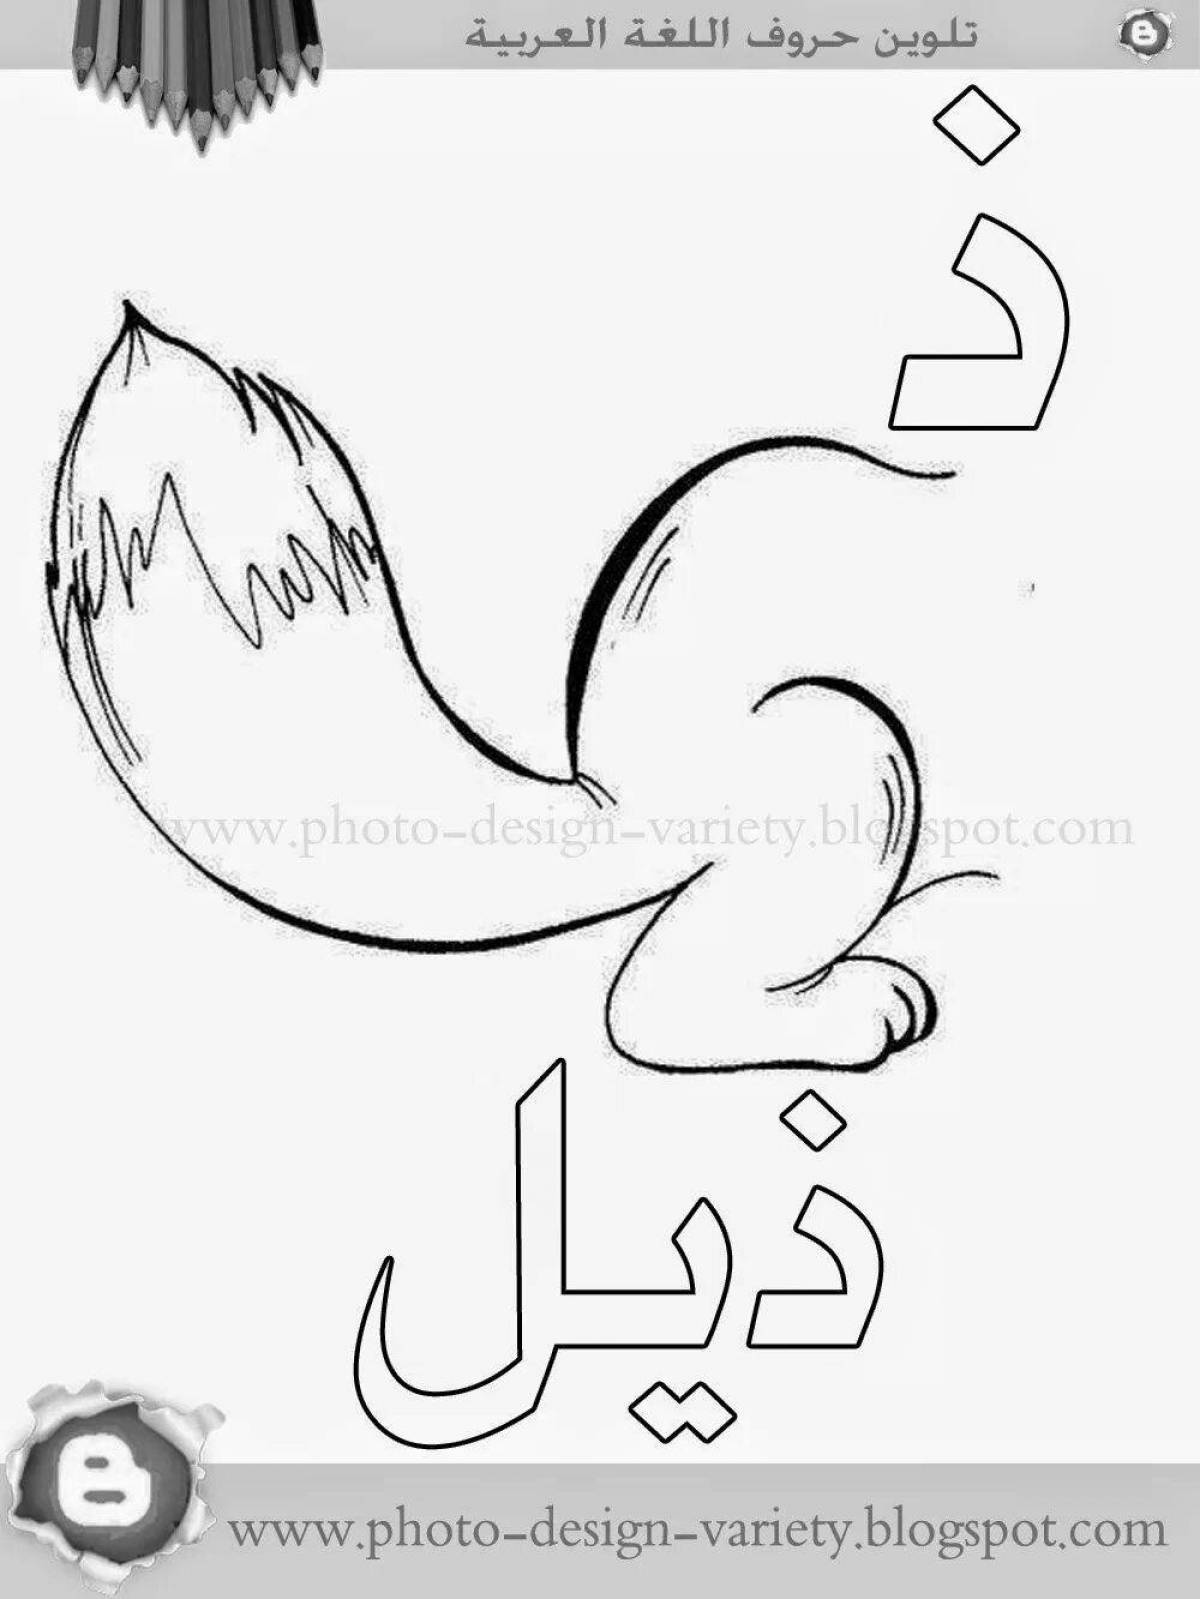 Fun coloring in Arabic letters